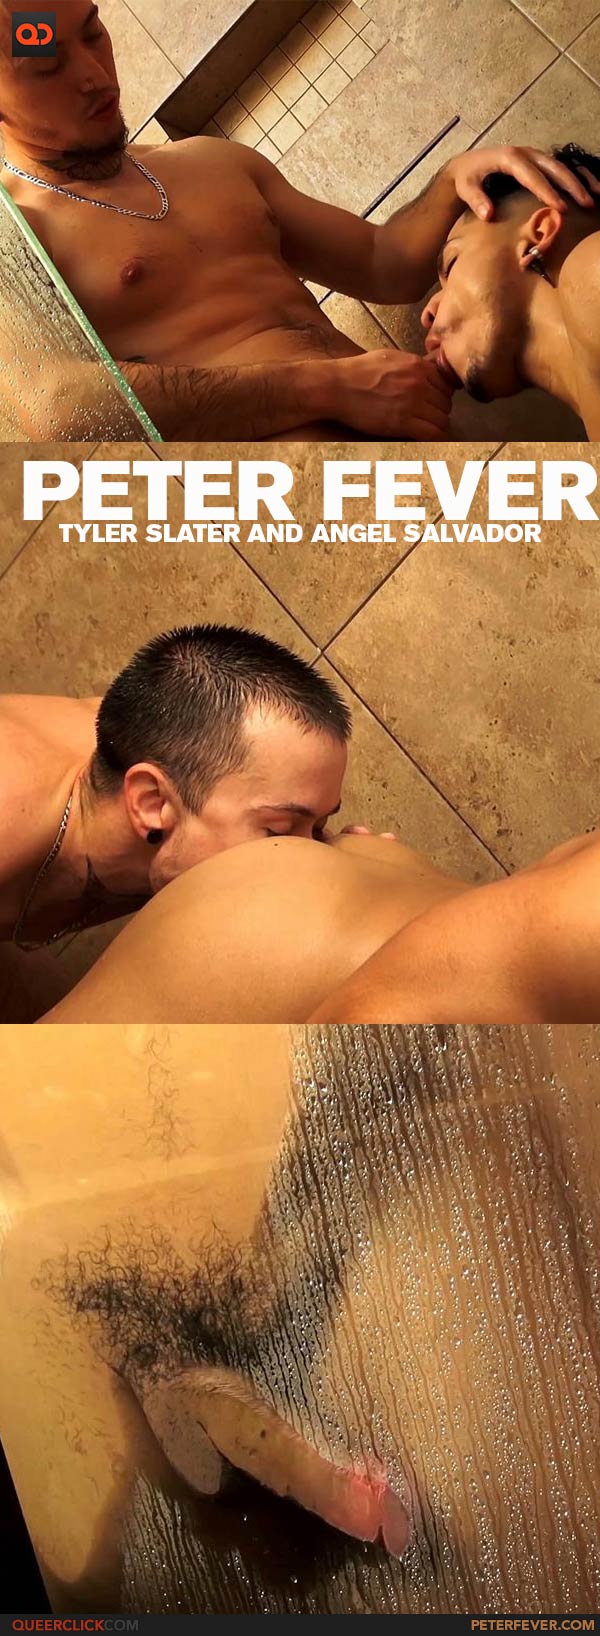 Peter Fever: Tyler Slater and Angel Salvador